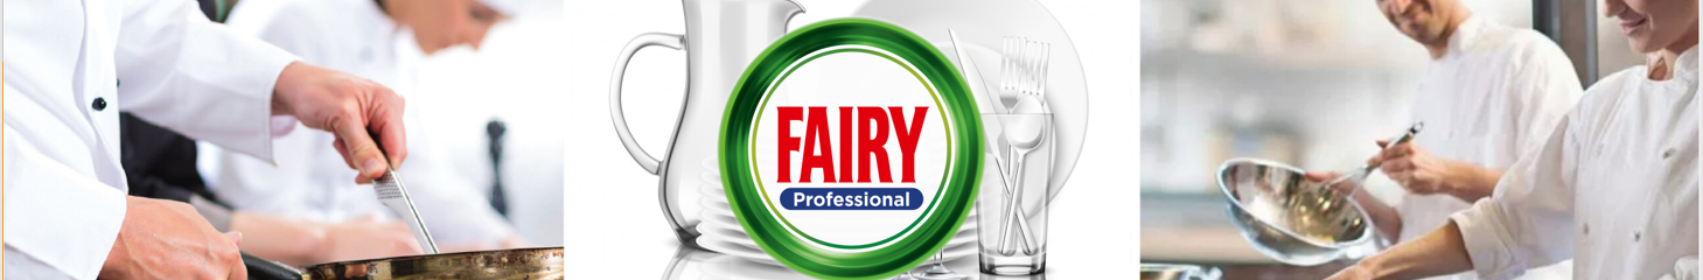 fairy-banner